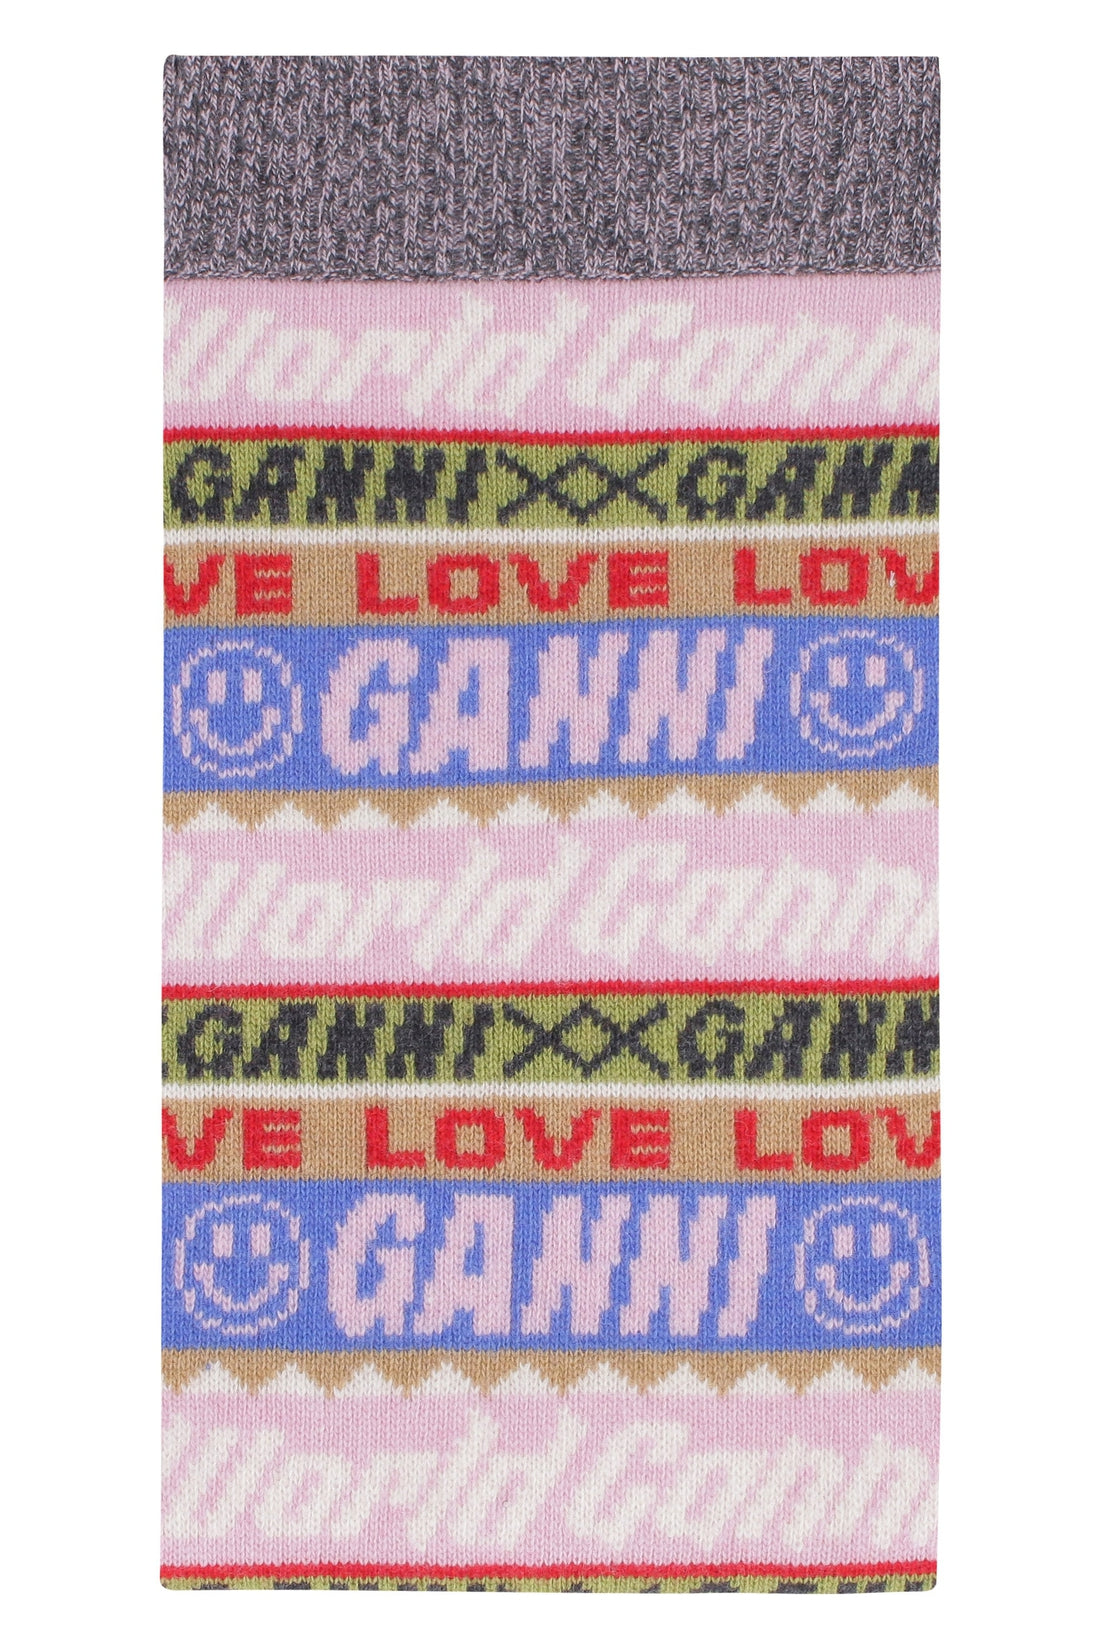 GANNI-OUTLET-SALE-Graphic Wool scarf-ARCHIVIST